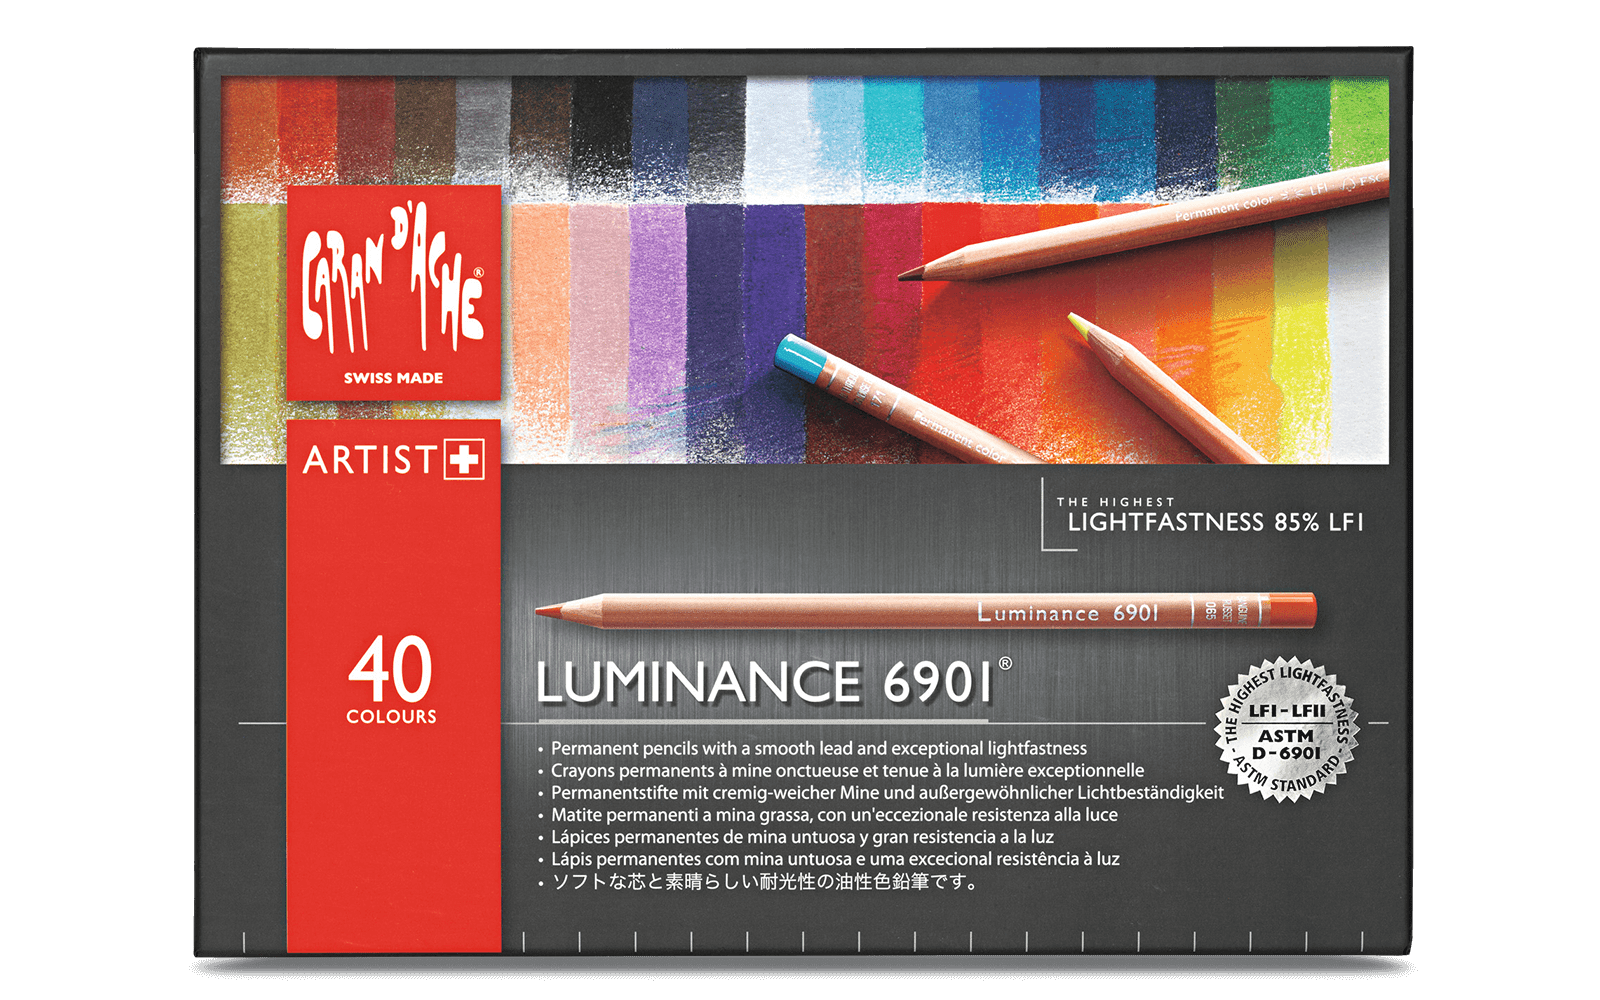 Caran d'Ache Luminance Colored Pencil - White